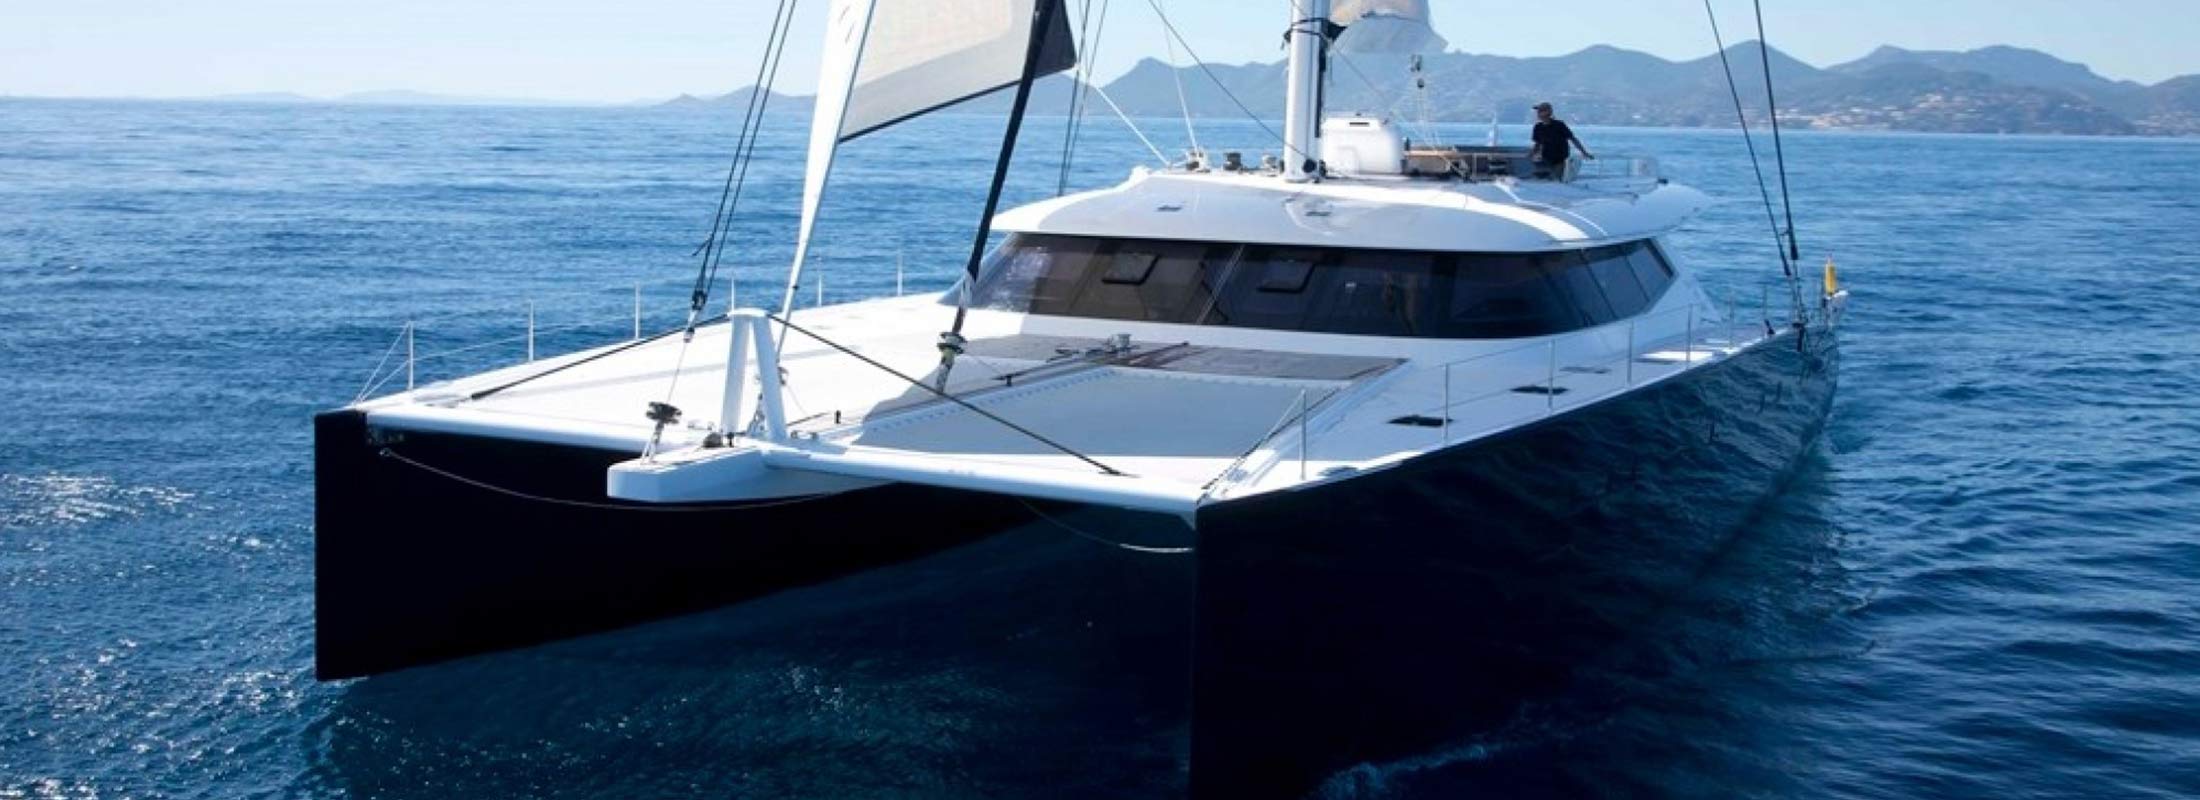 Levante Sailing Yacht for Charter Mediterranean Caribbean Sea slider 1